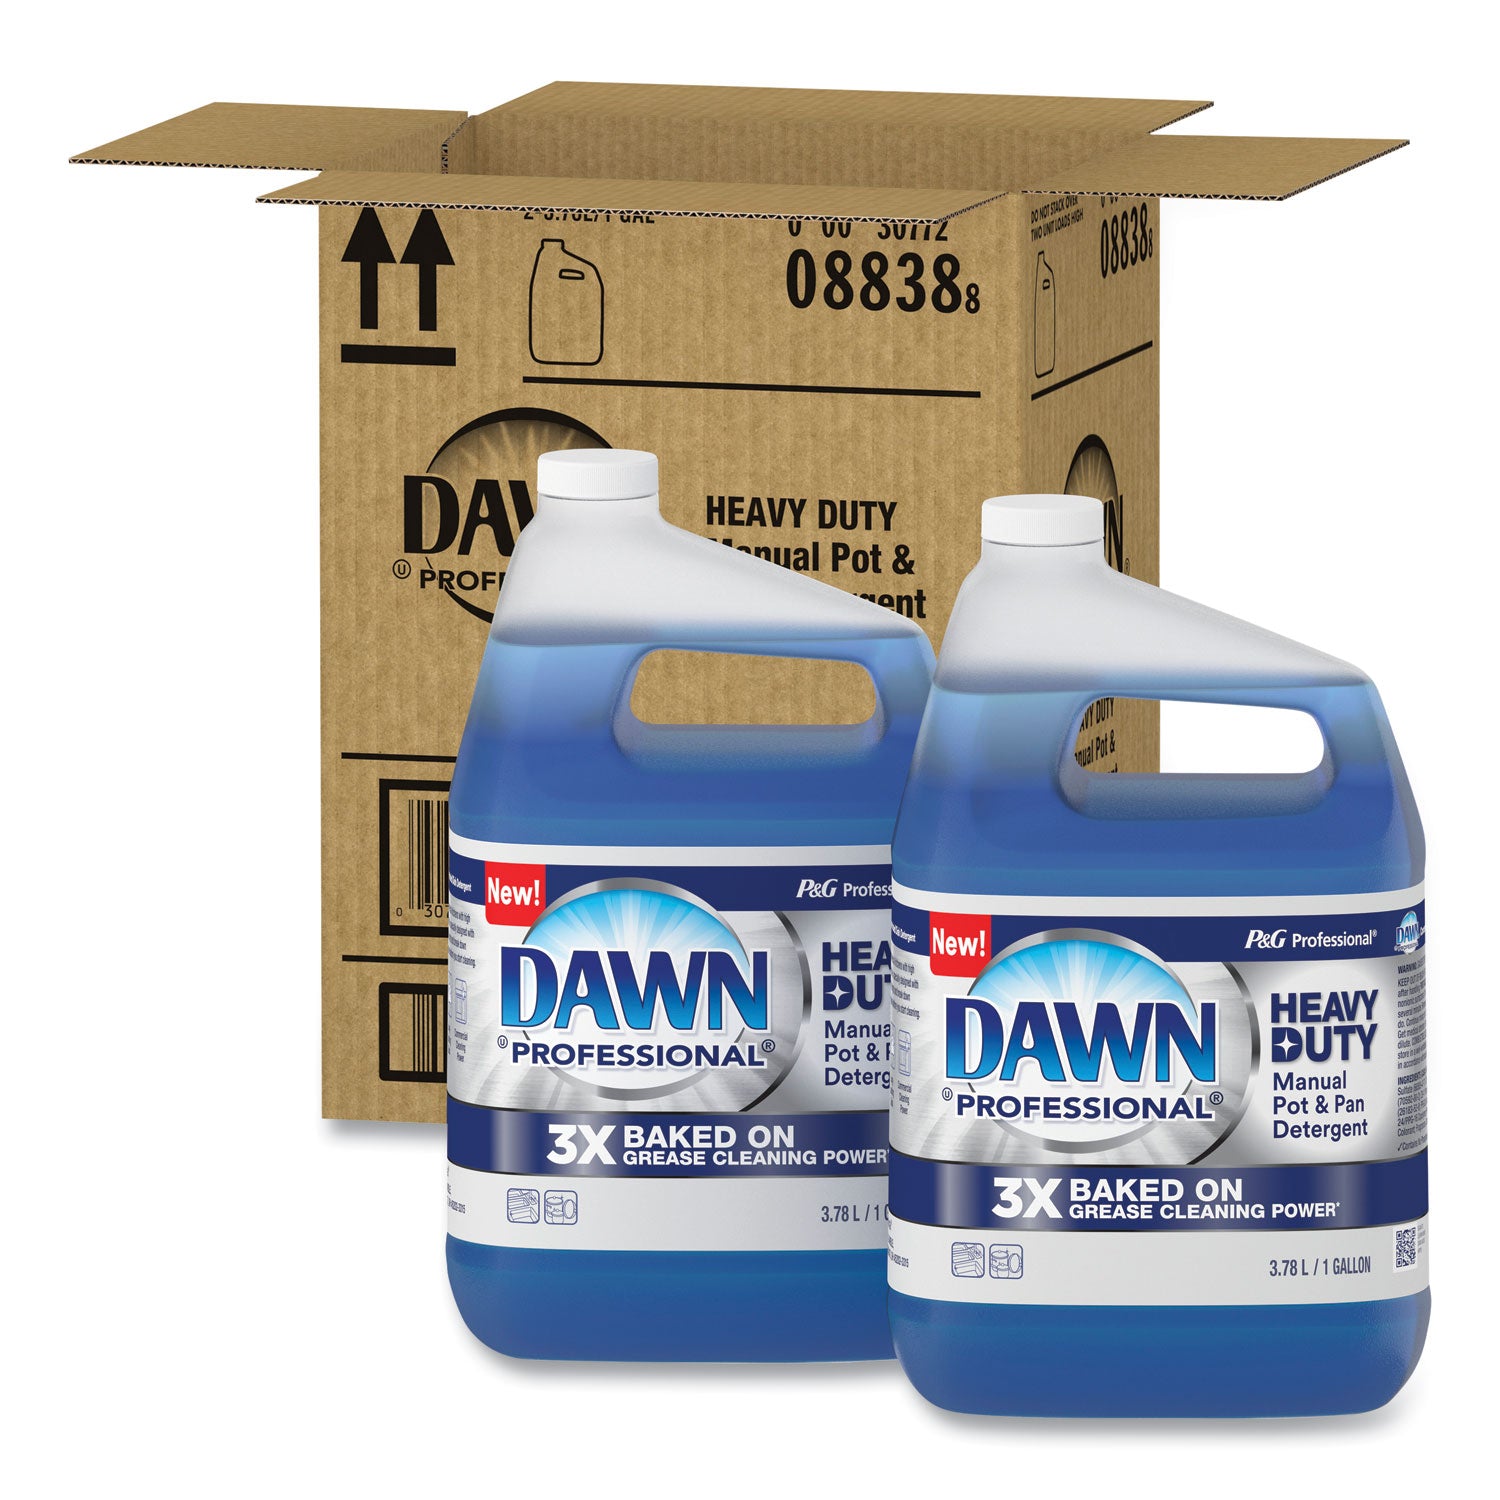 heavy-duty-manual-pot-pan-dish-detergent-original-scent-1-gal-bottle-2-carton_pgc08838 - 1